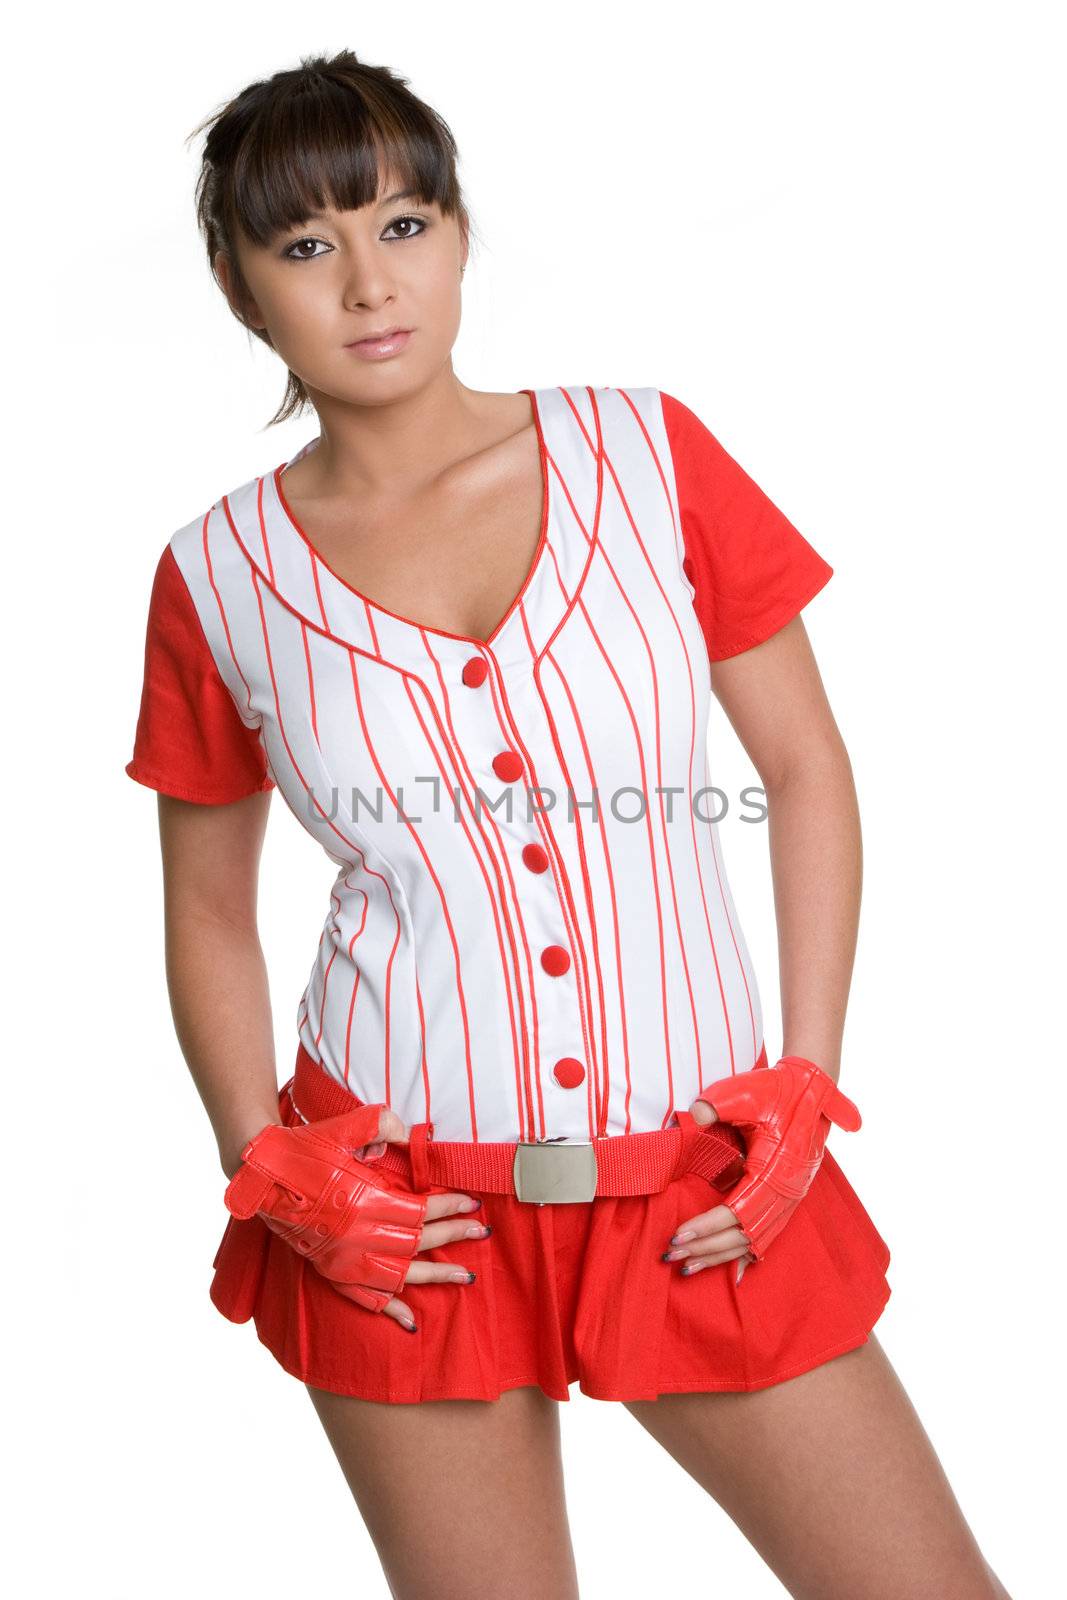 Baseball Woman by keeweeboy